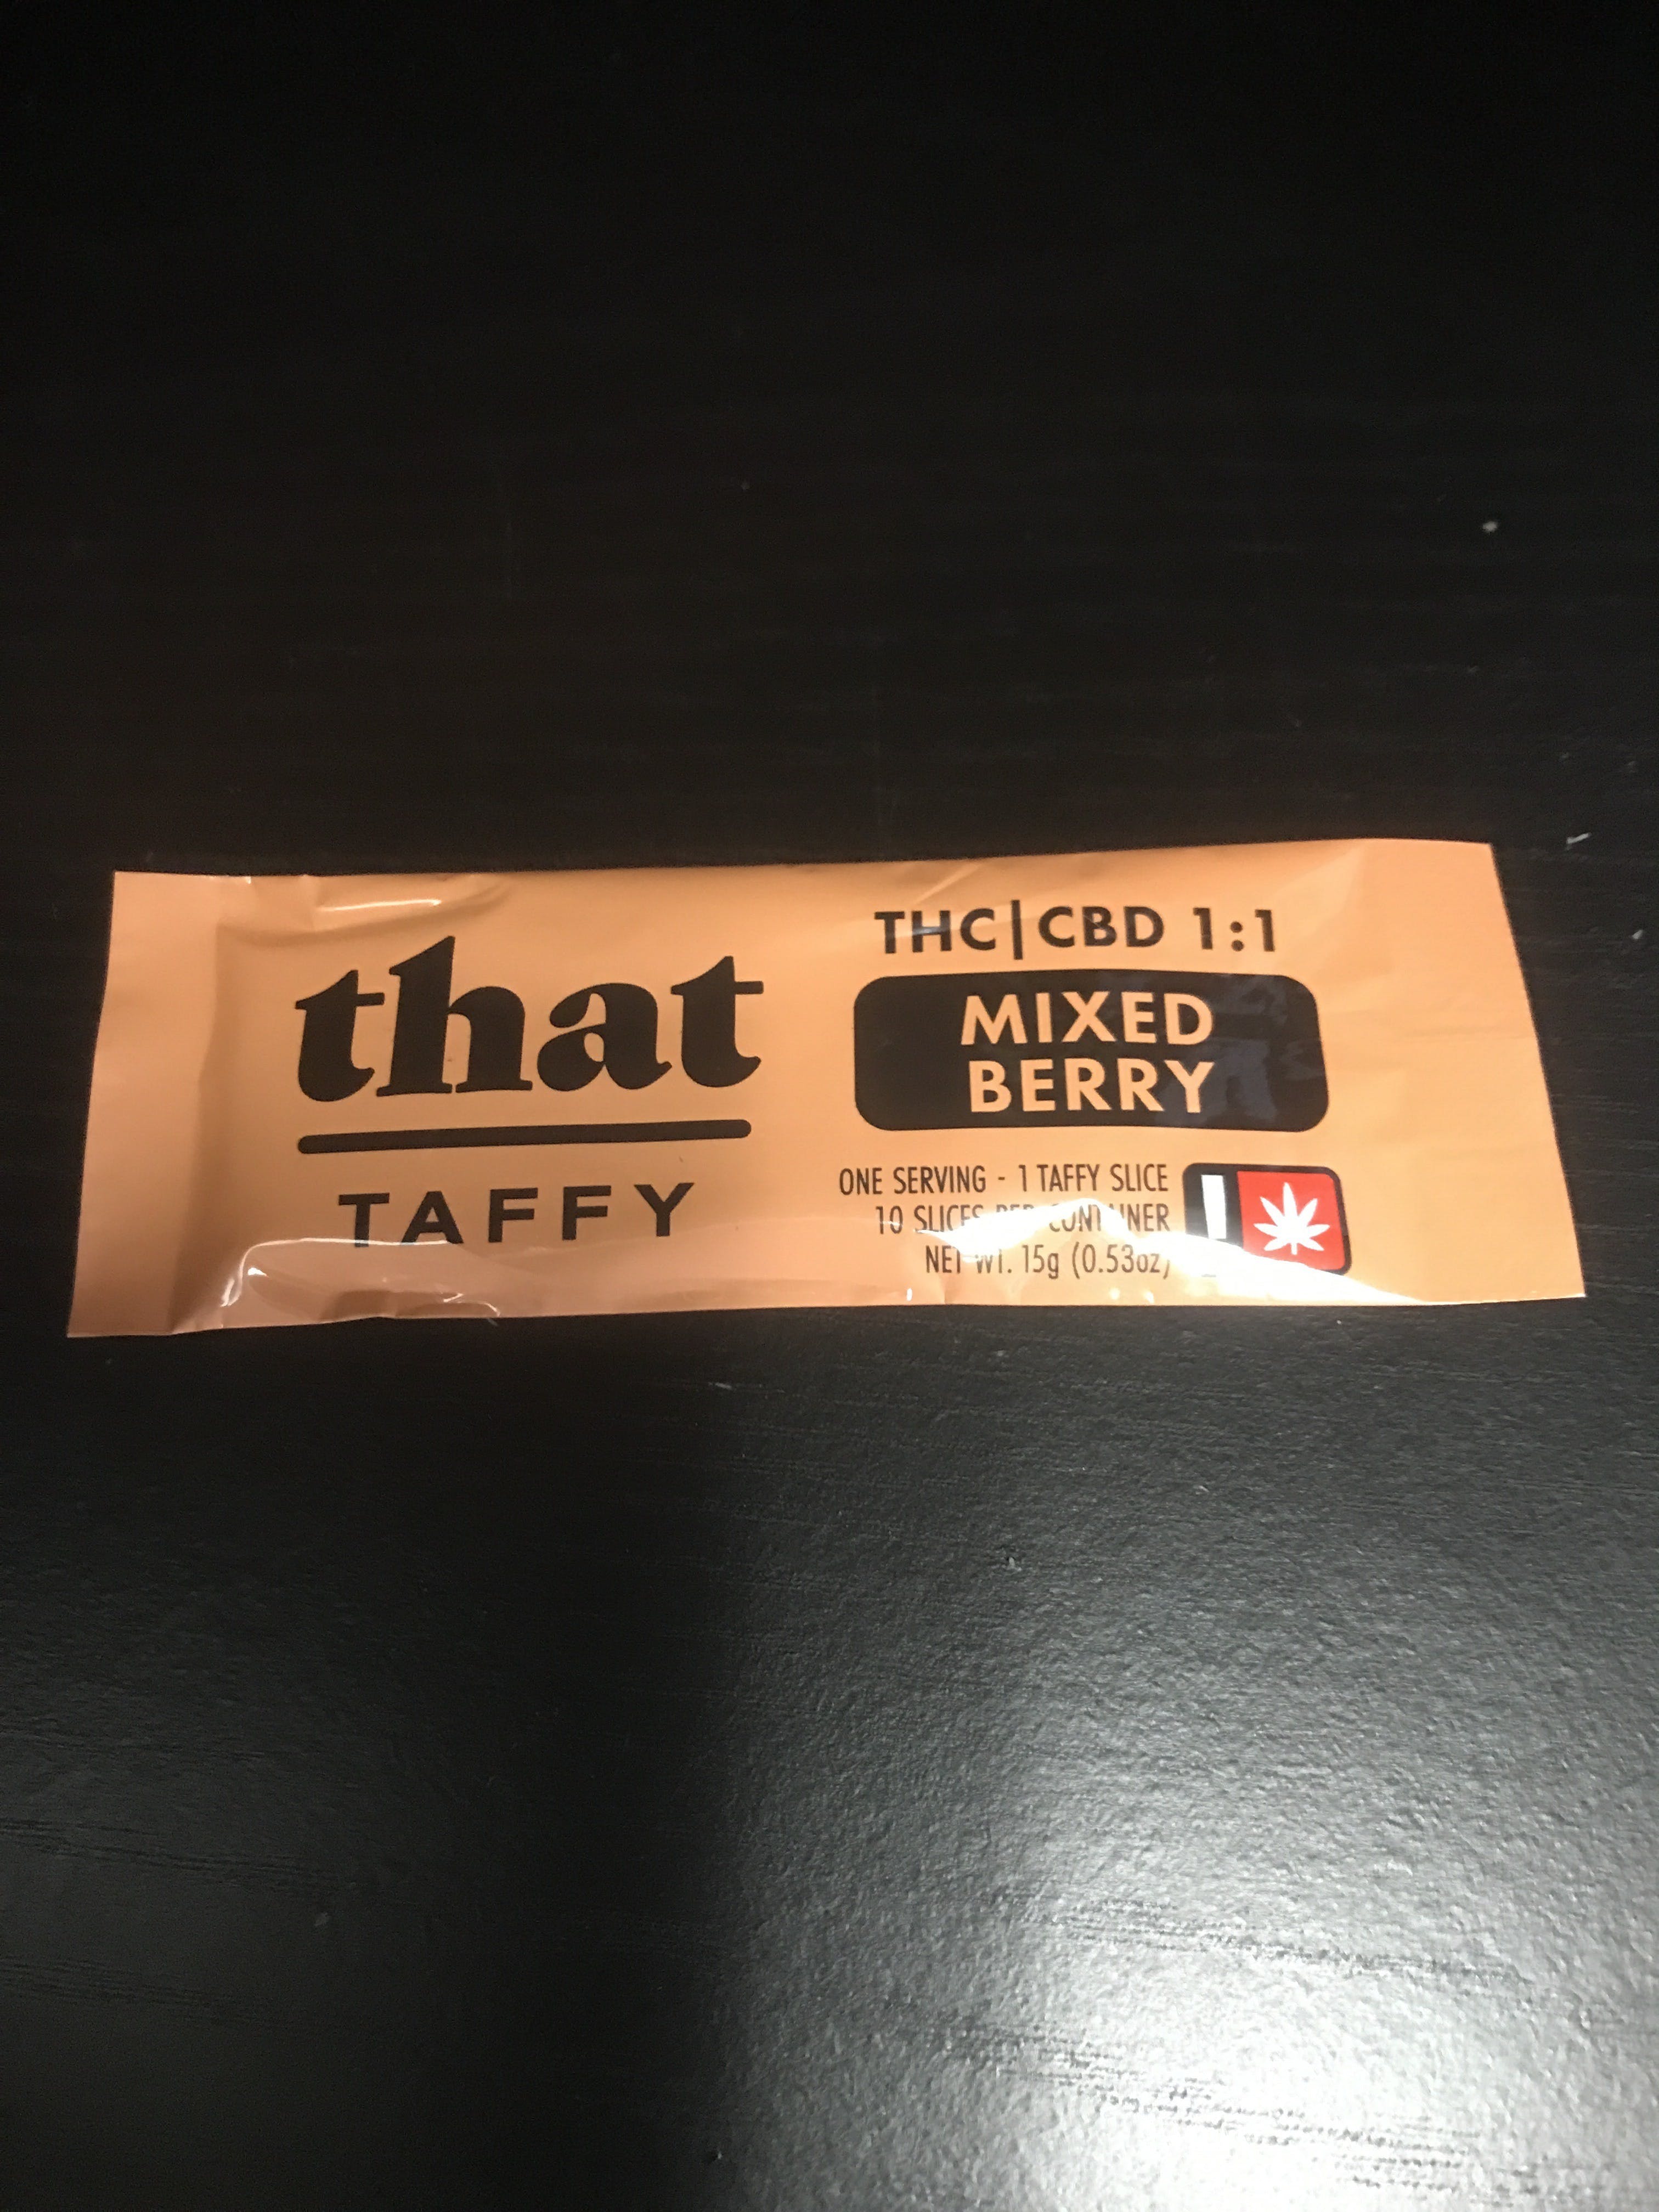 edible-that-taffy-11-mixed-berry-taffy-234022